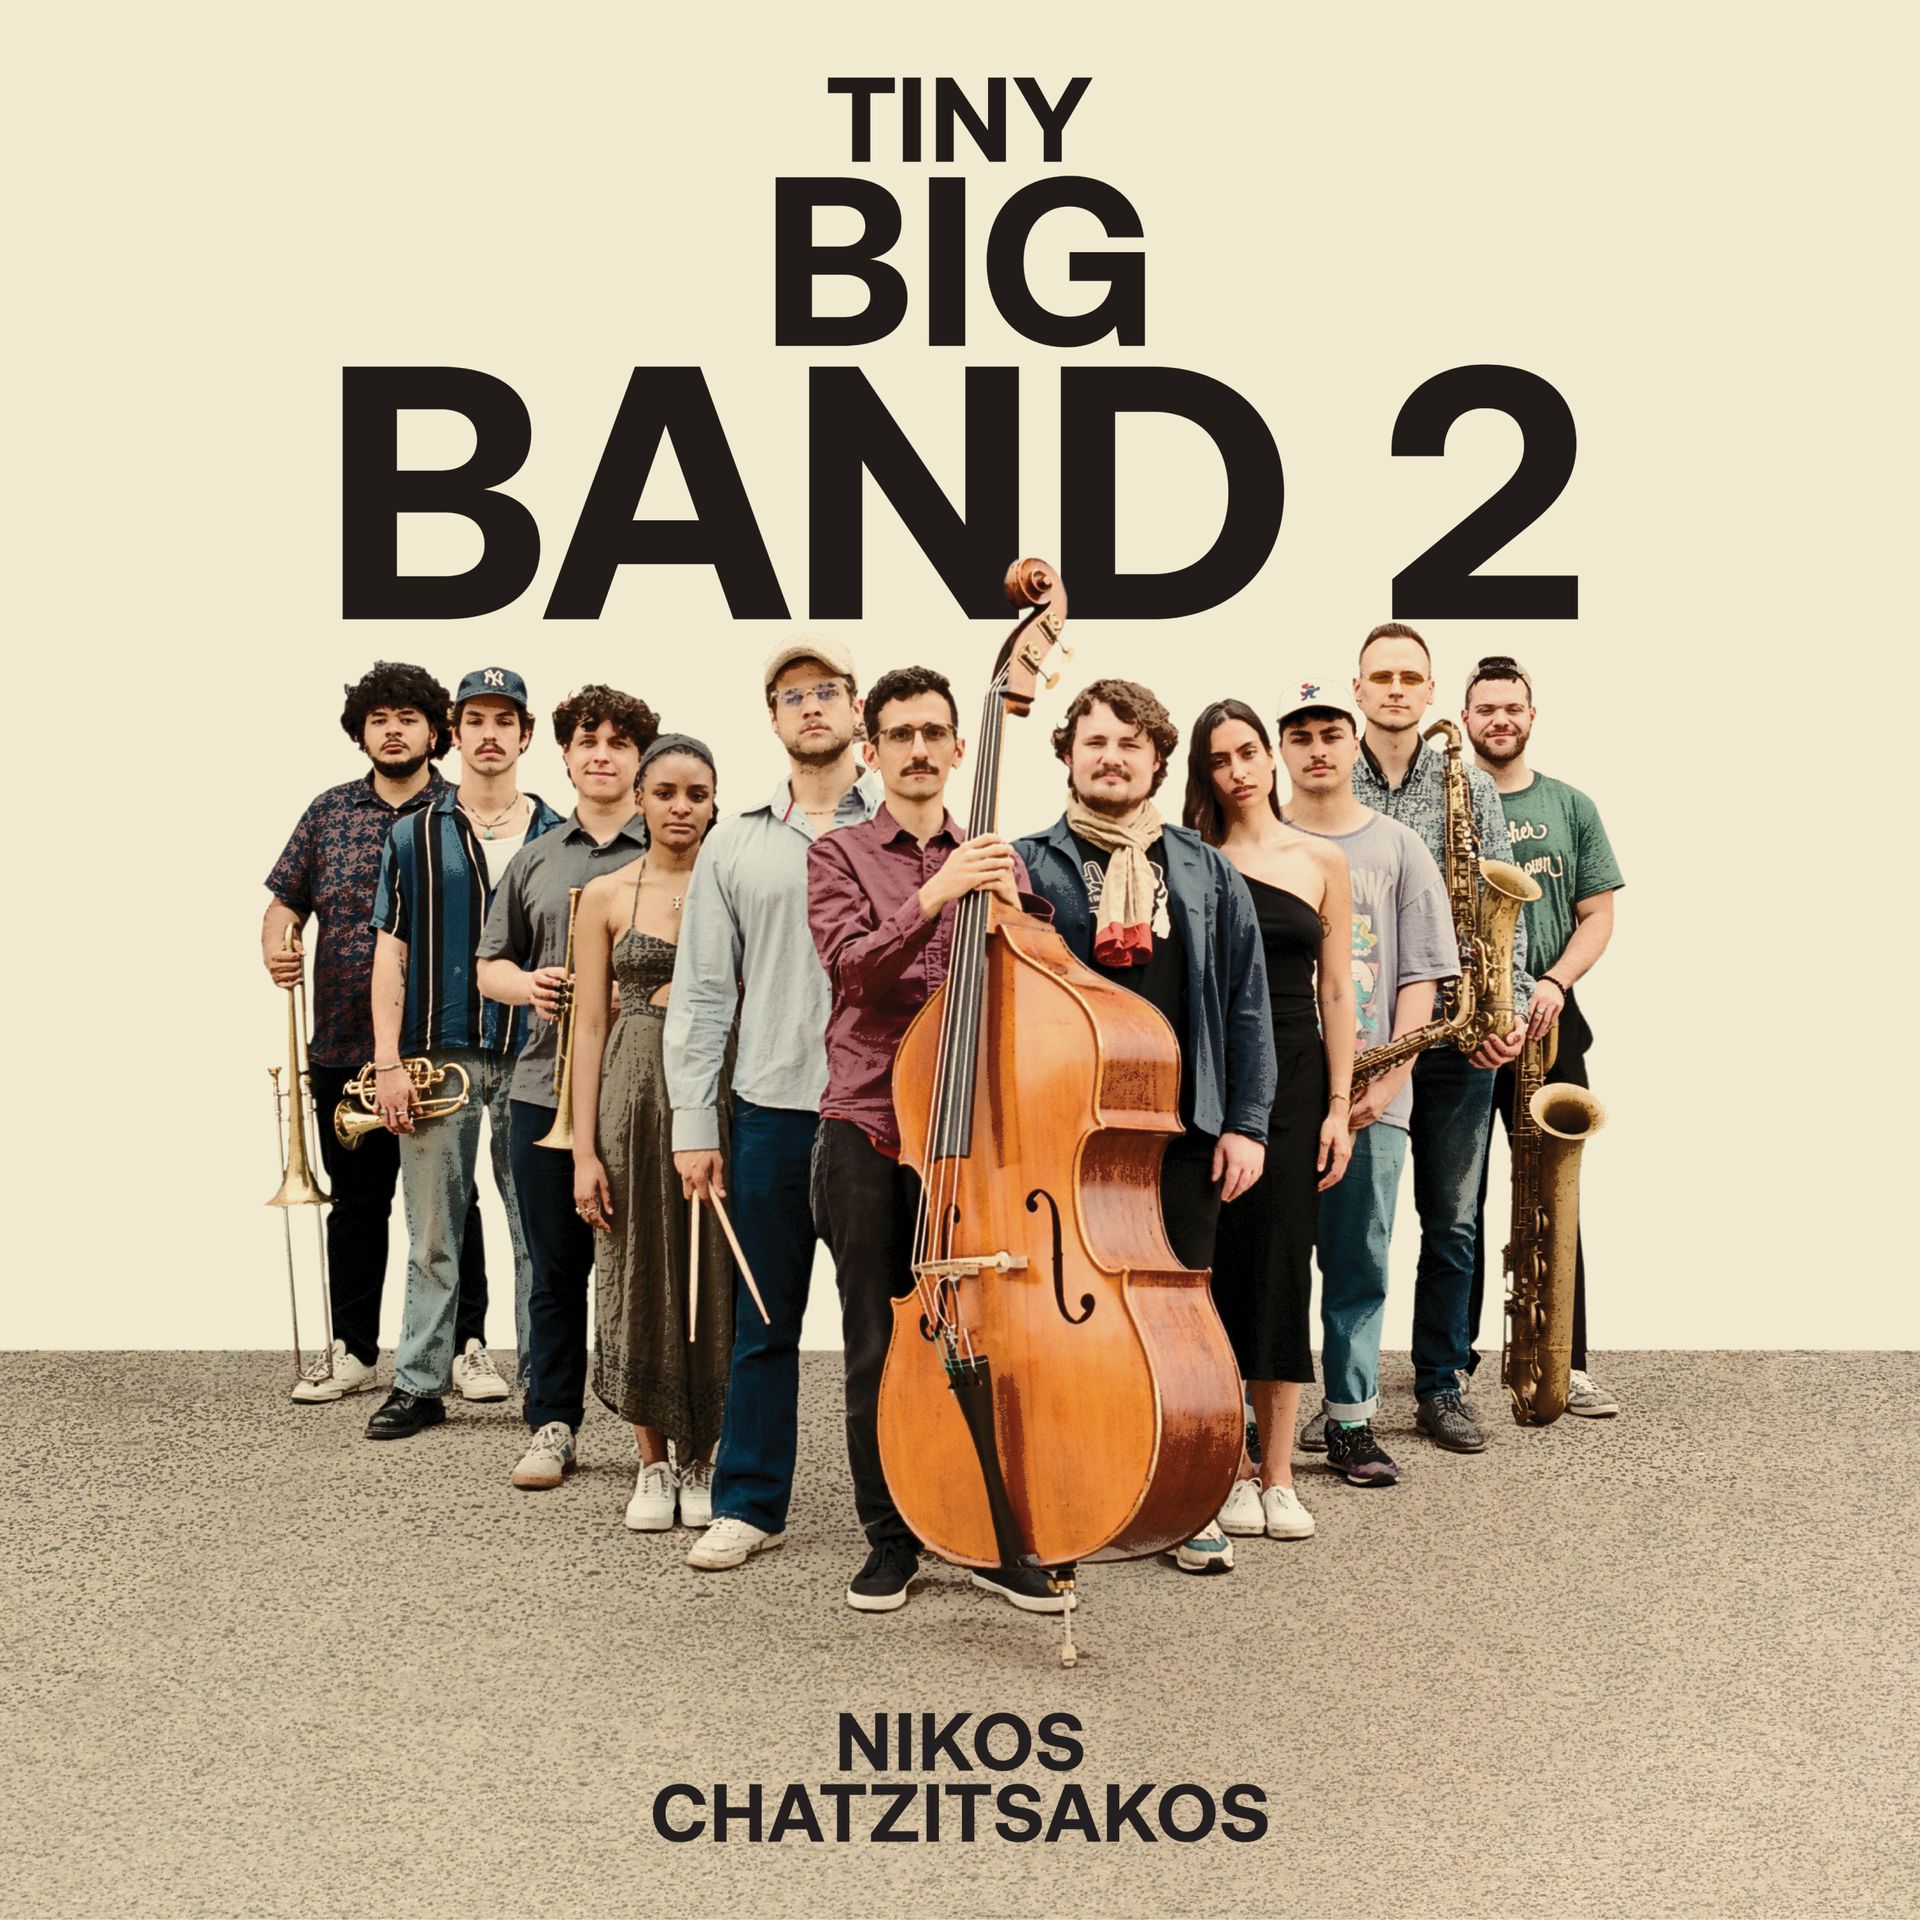 Nikos Chatzisakos' Tiny Big Band 2